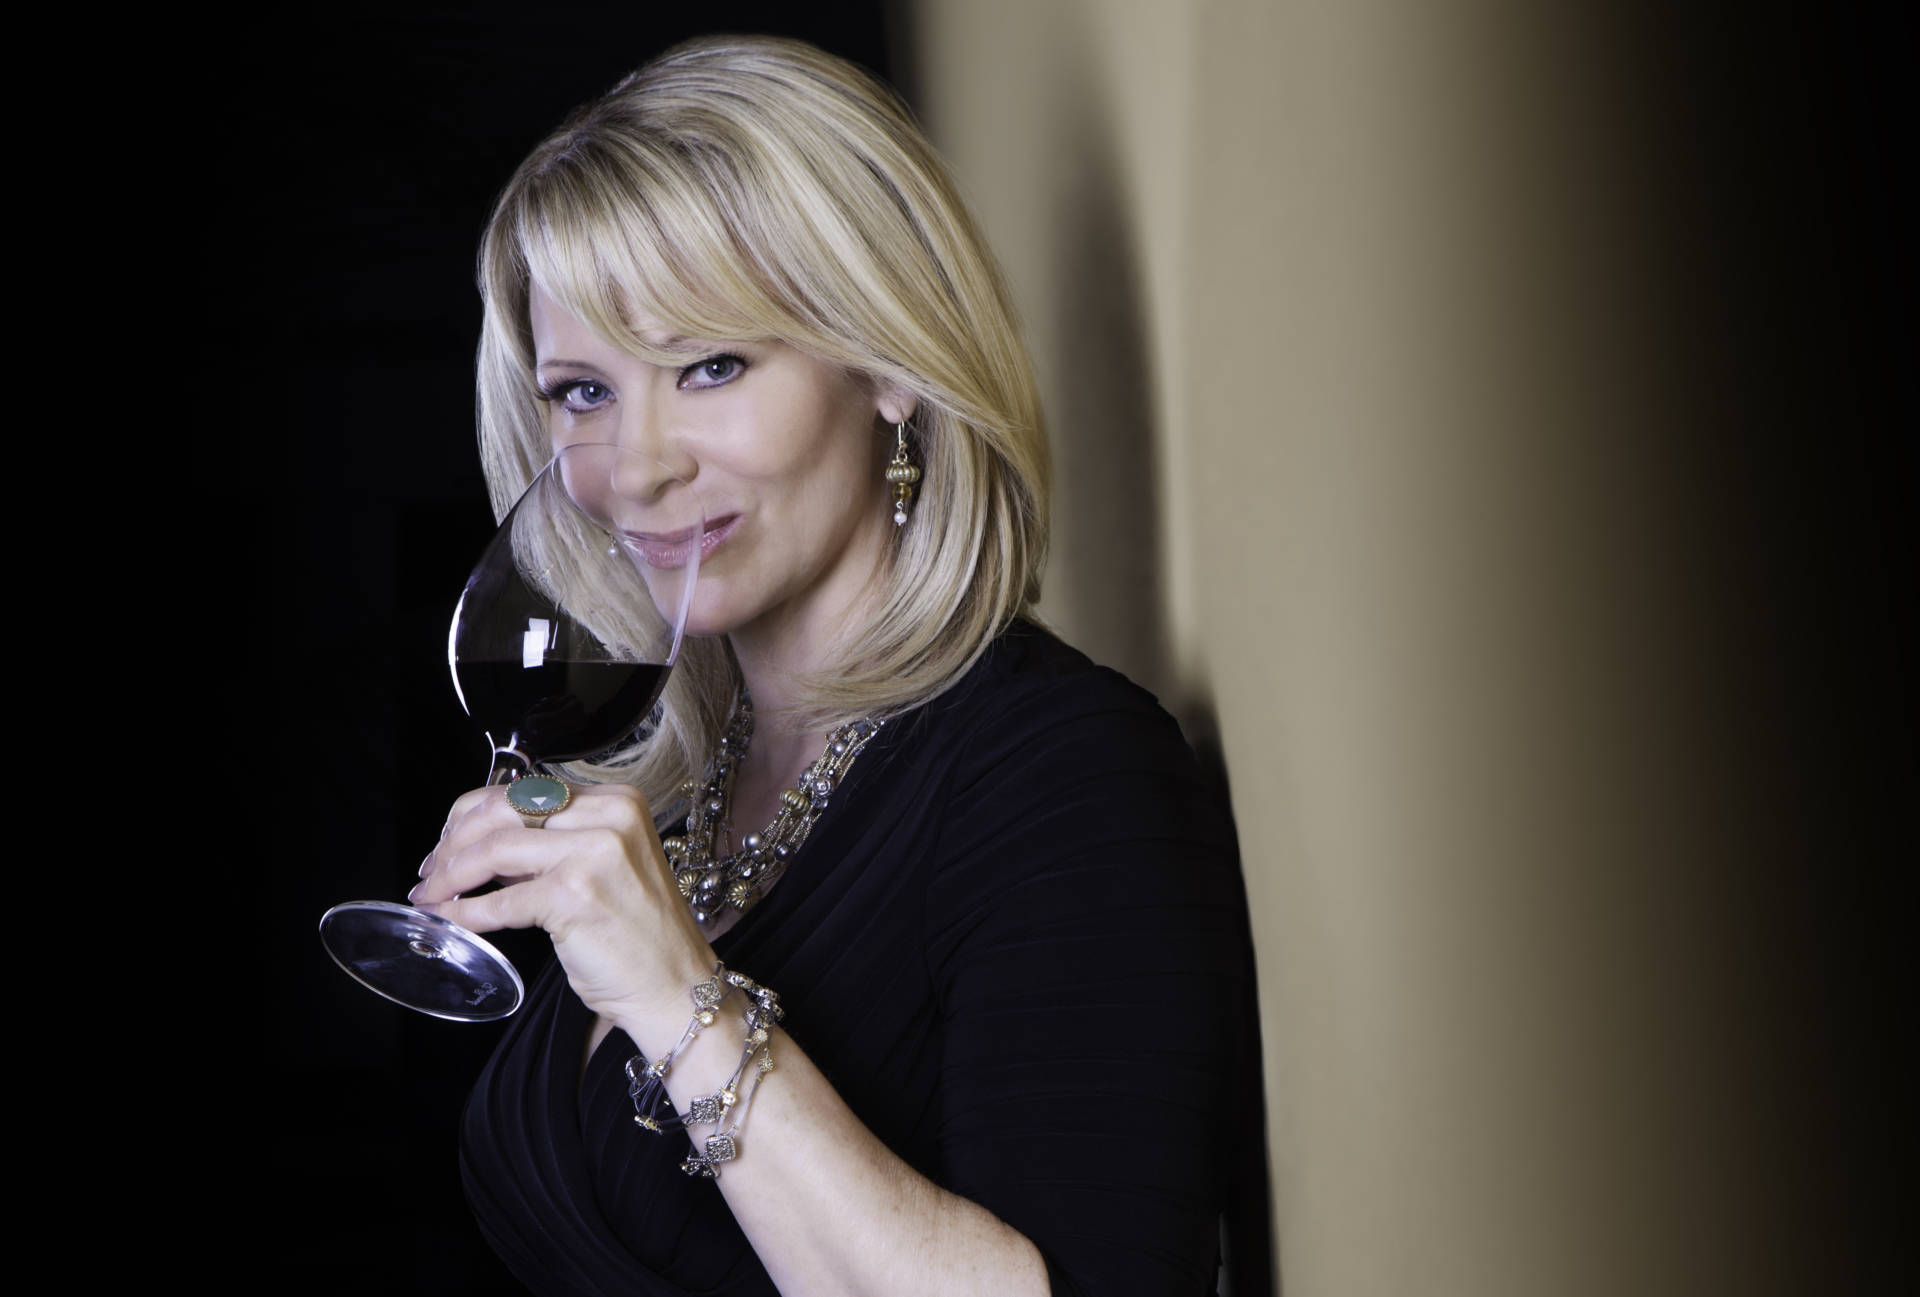 Host Leslie Sbrocco sips wine